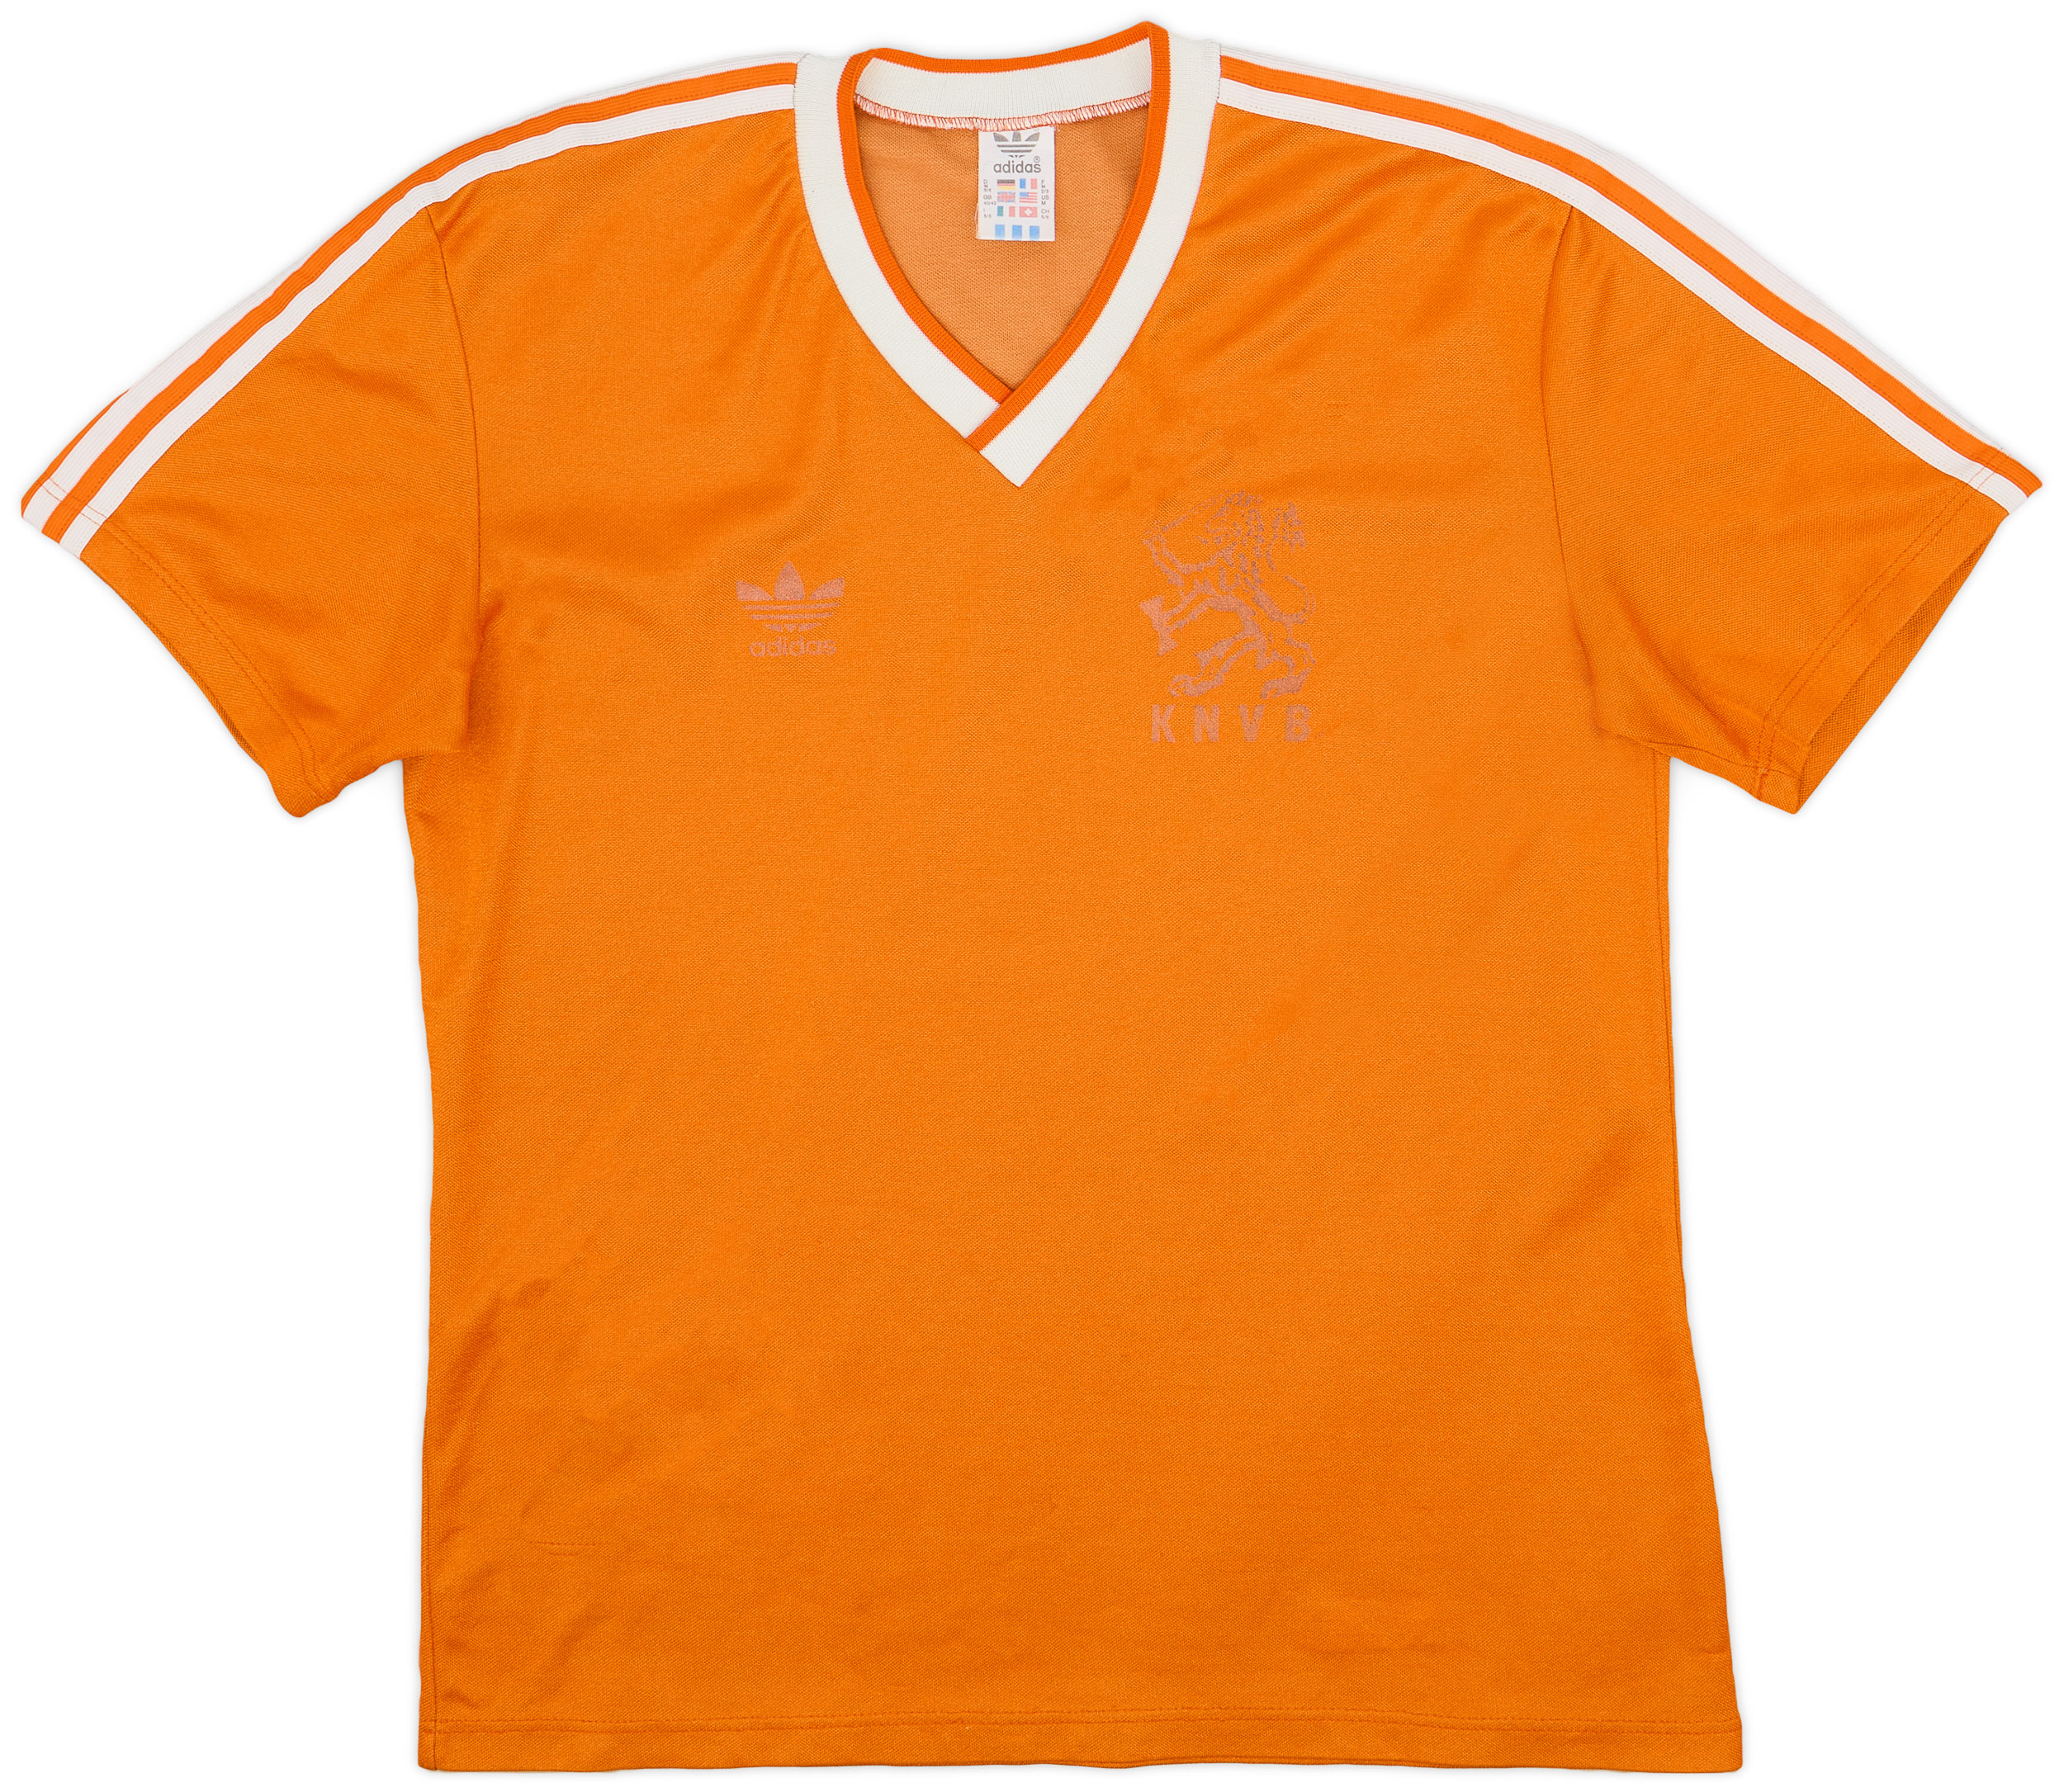 Netherlands  home camisa (Original)